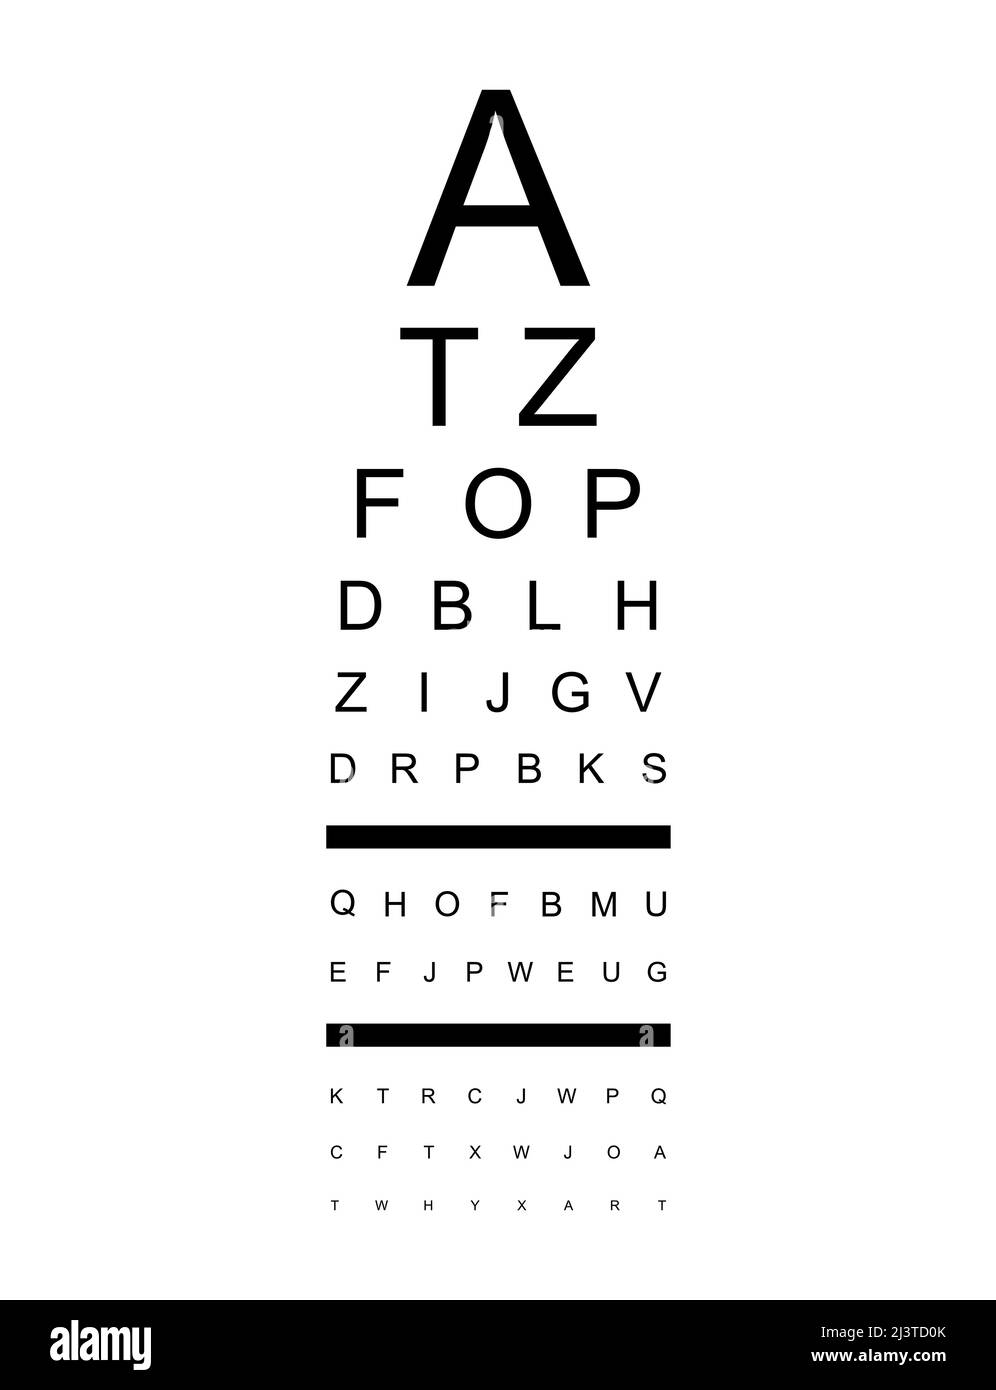 Share 116+ optometrist logo best